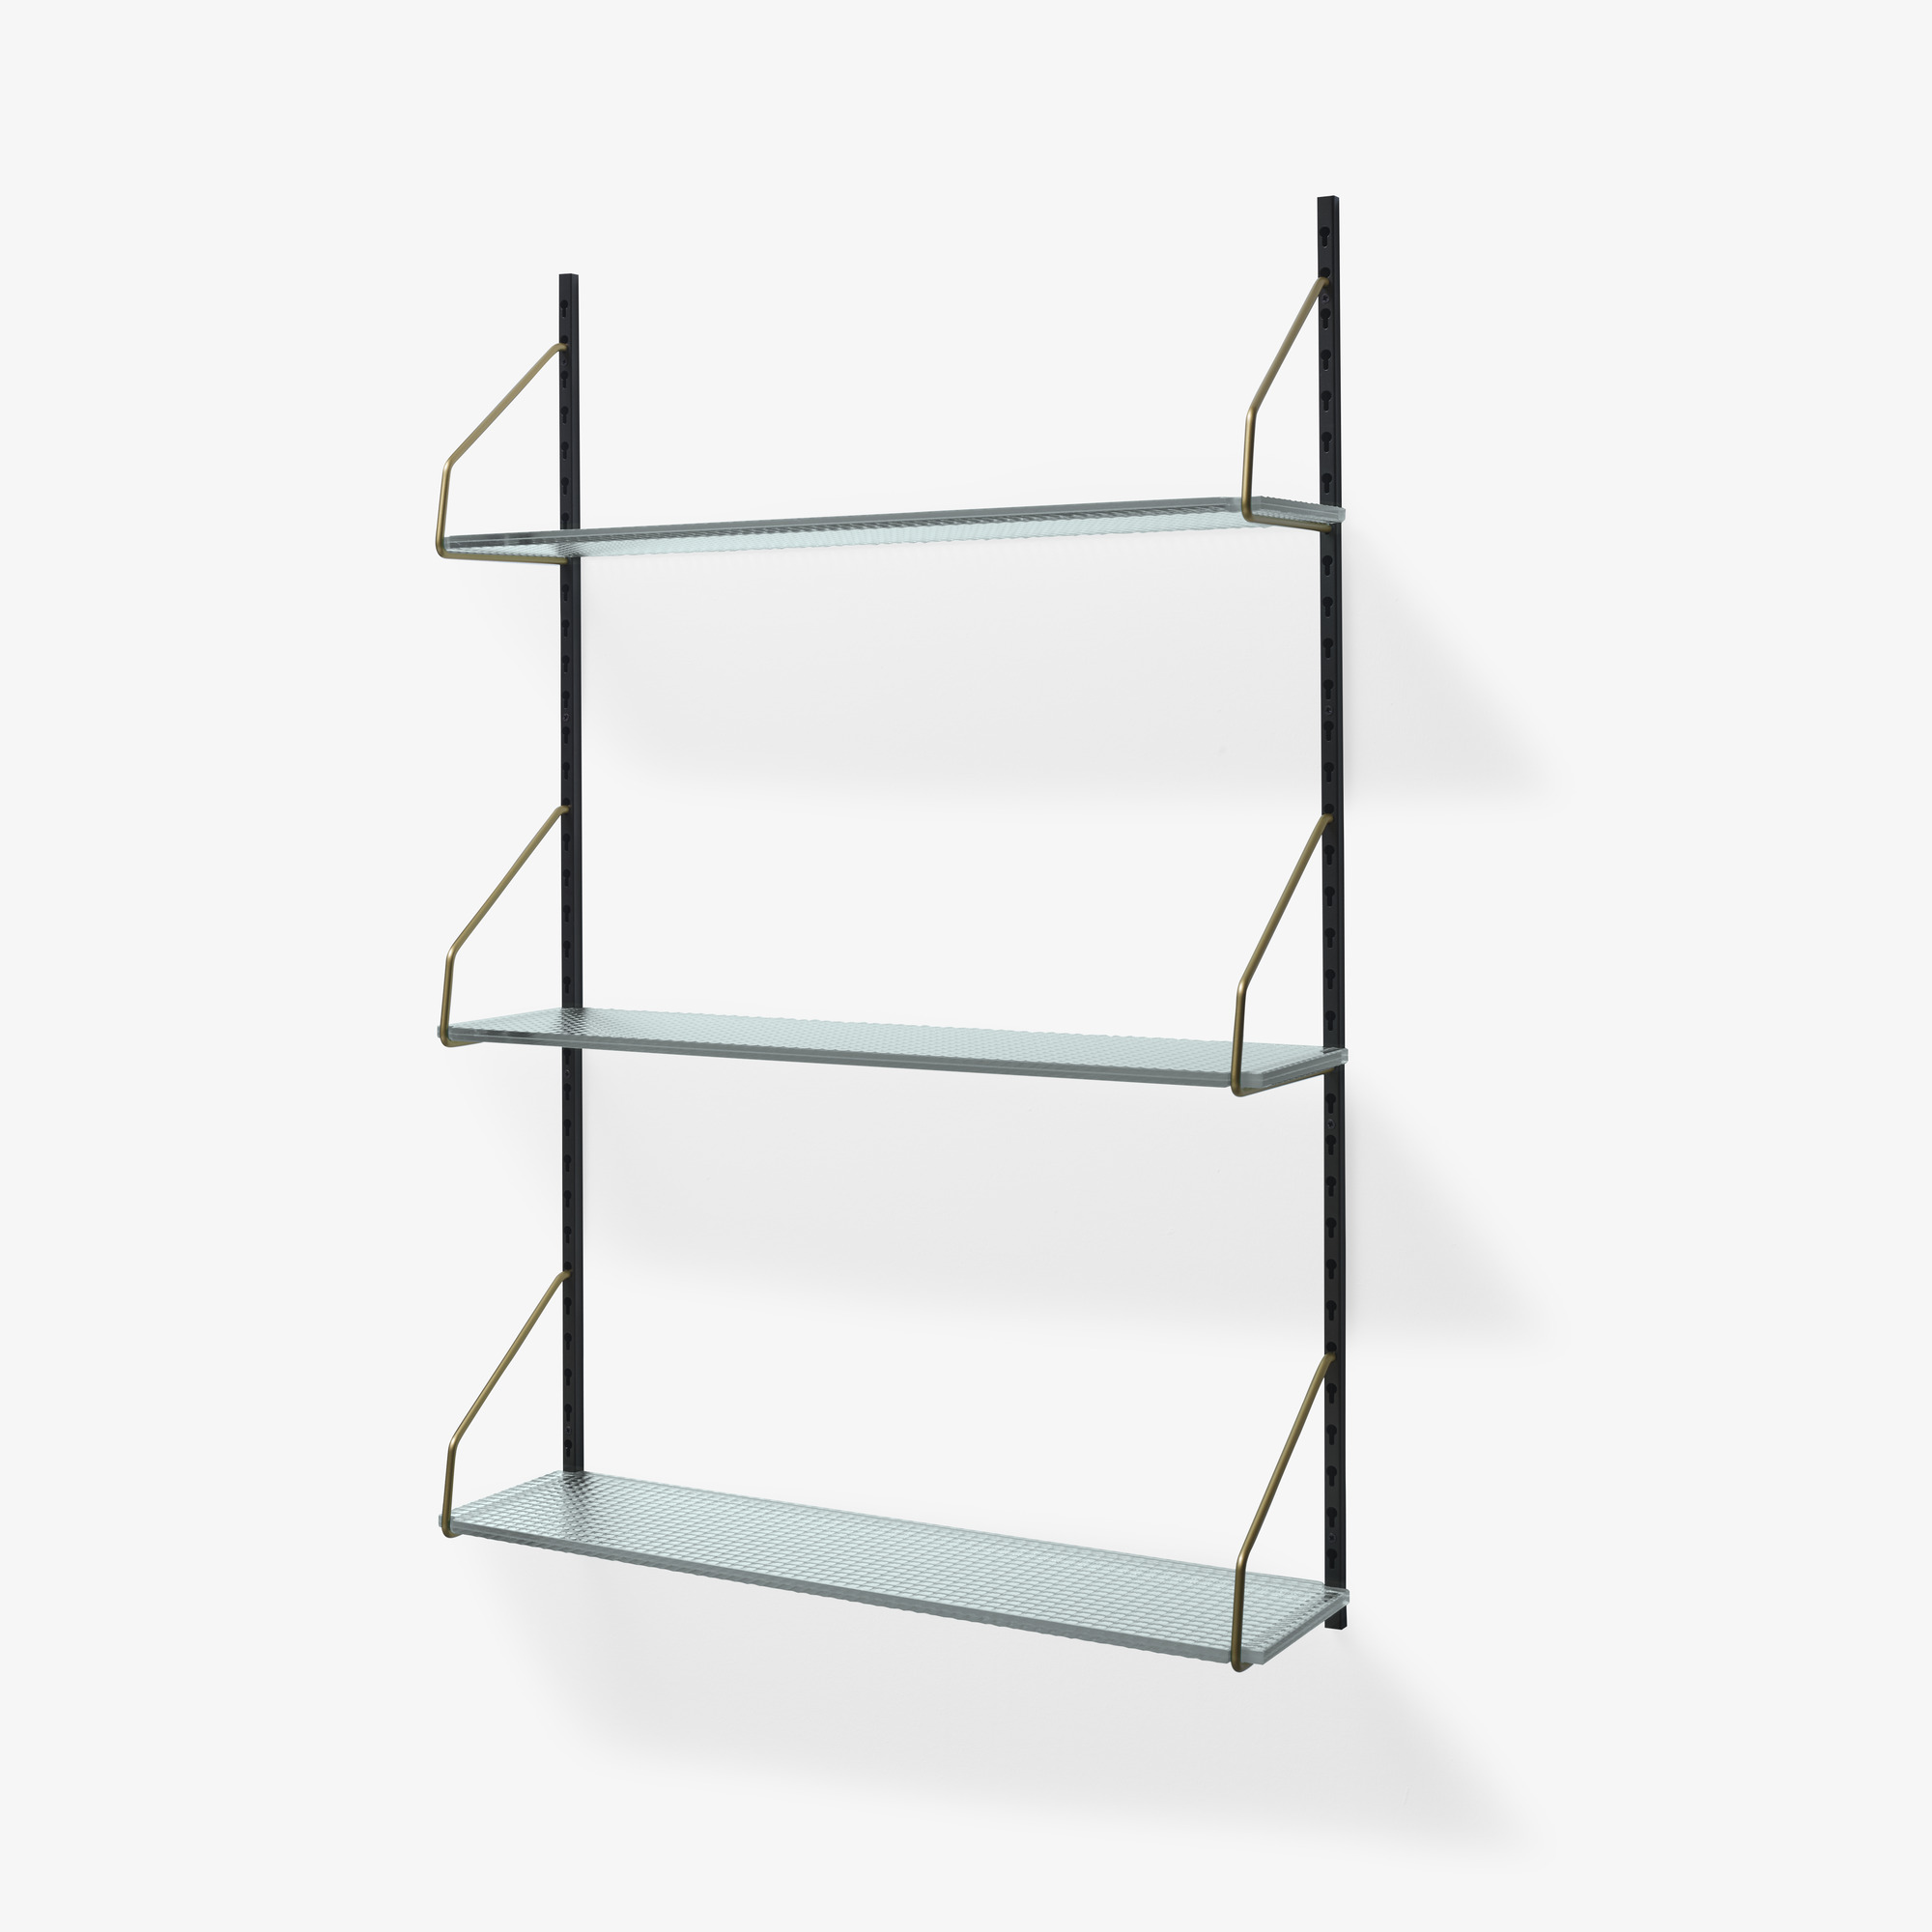 Image Wall-mounted bookshelf with glass shelves  2